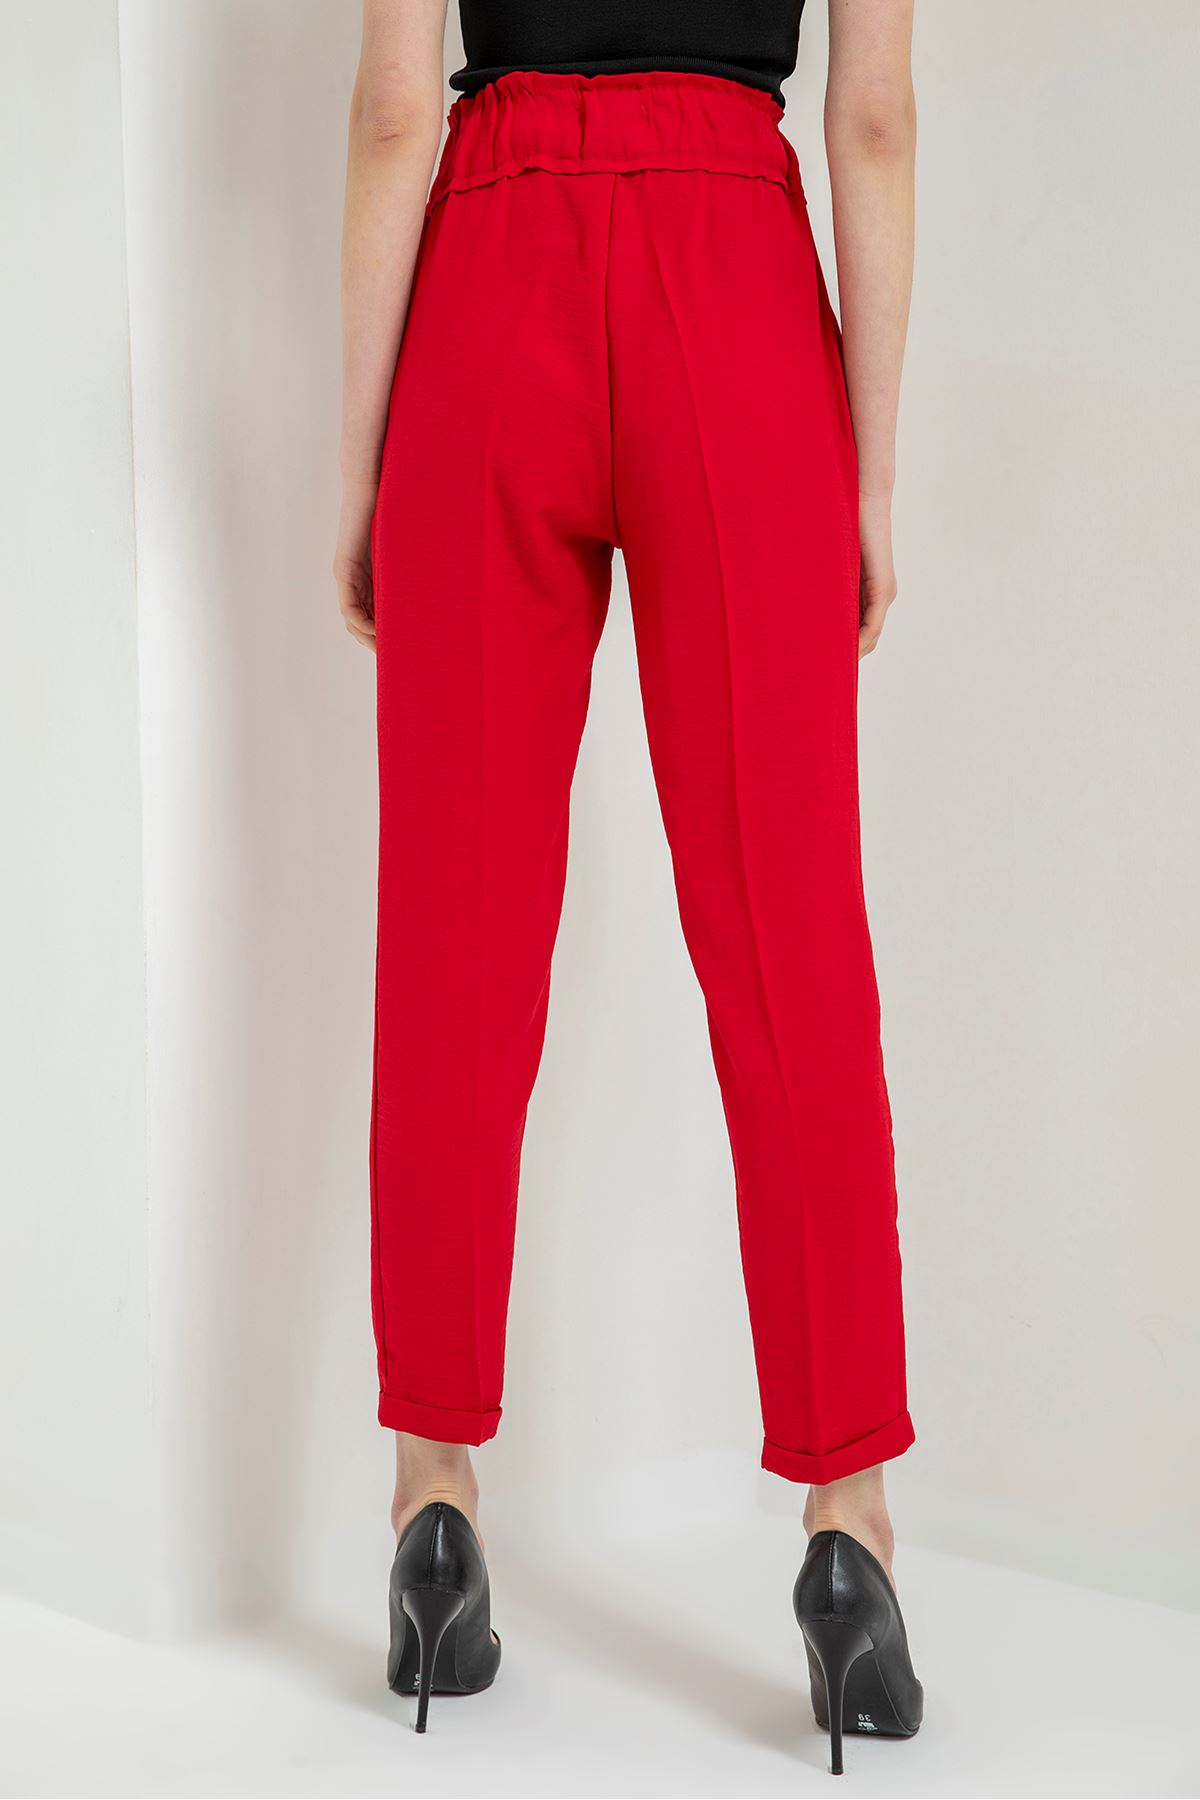 Linen Aerobin Fabric Ankle Length Wide Women'S Trouser - Red